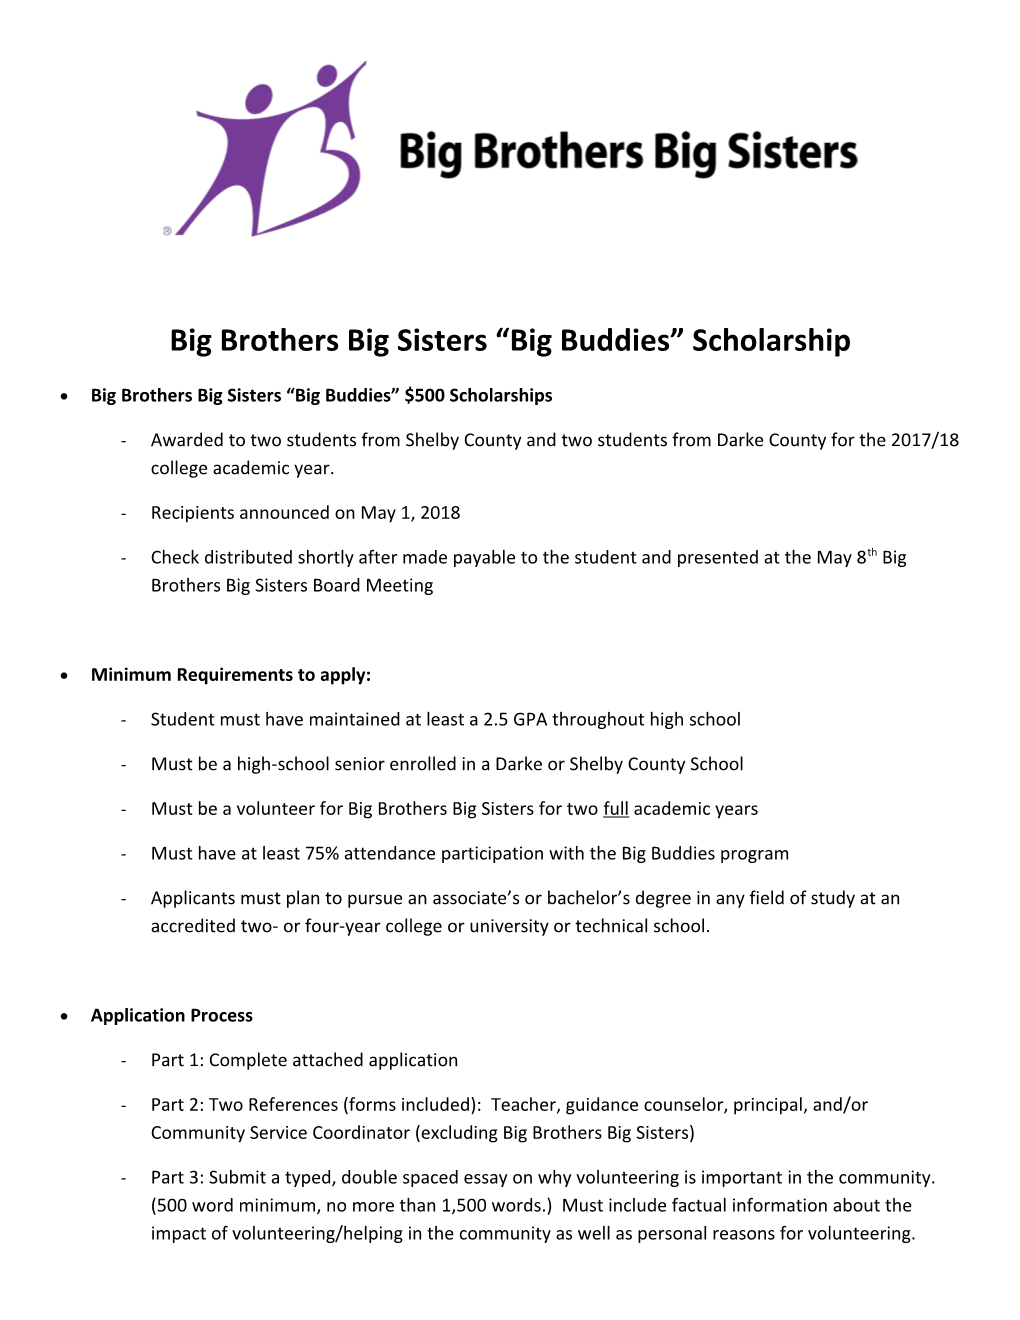 Big Brothers Big Sisters Big Buddies Scholarship